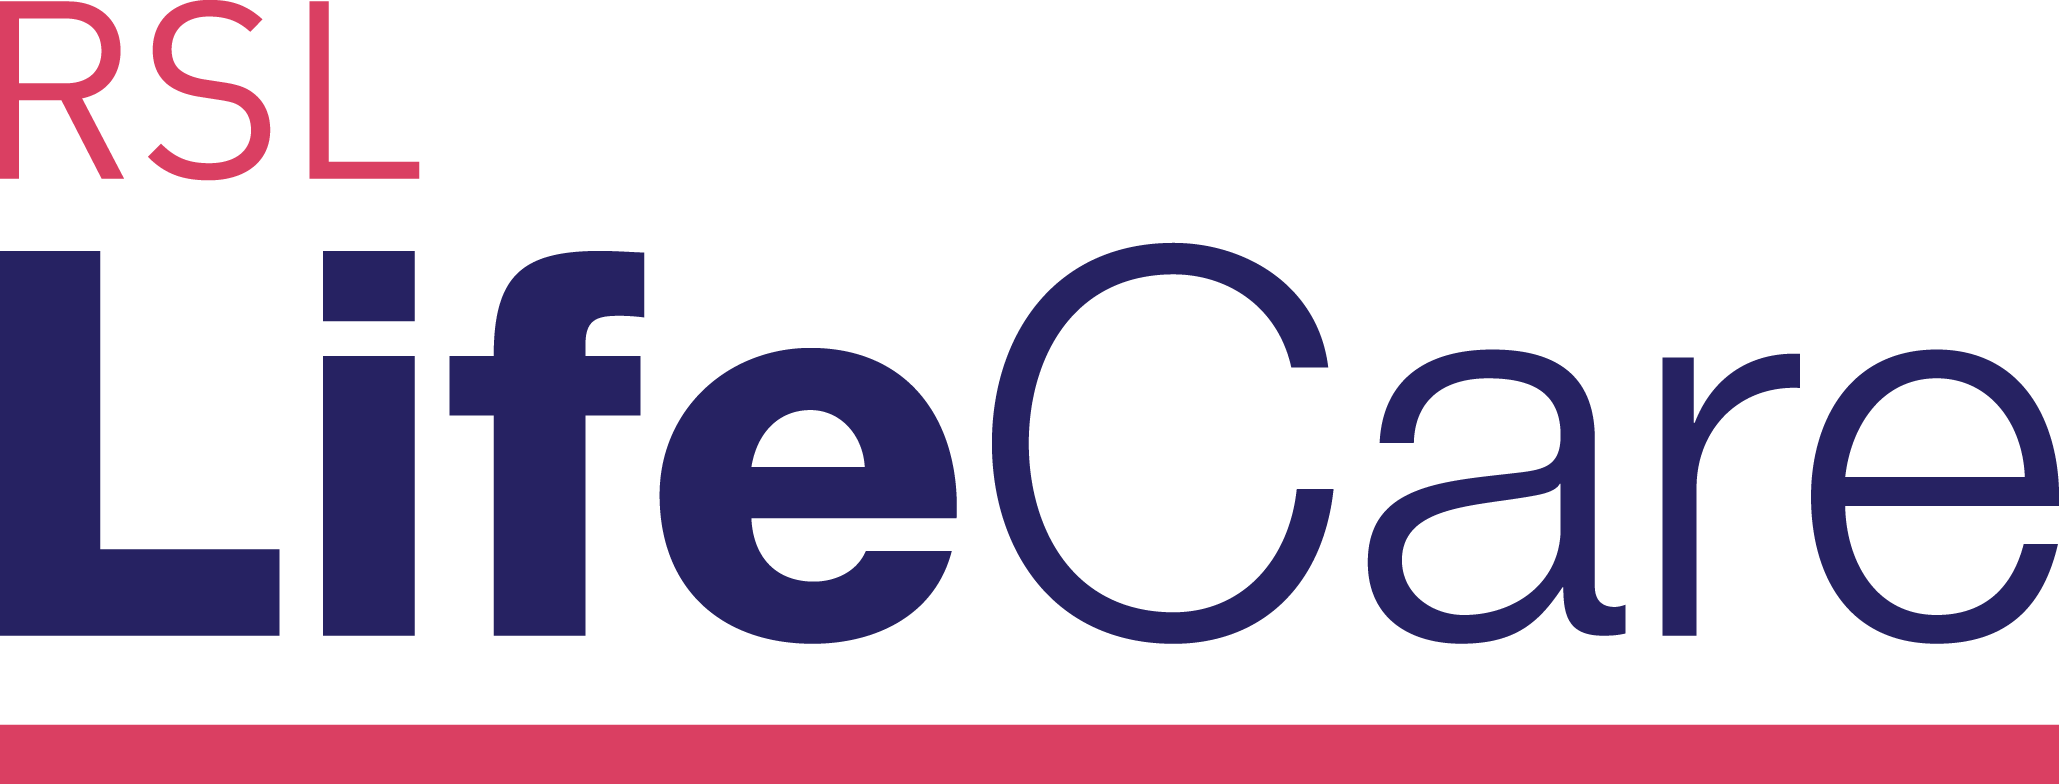 RSL LifeCare Badcoe House logo